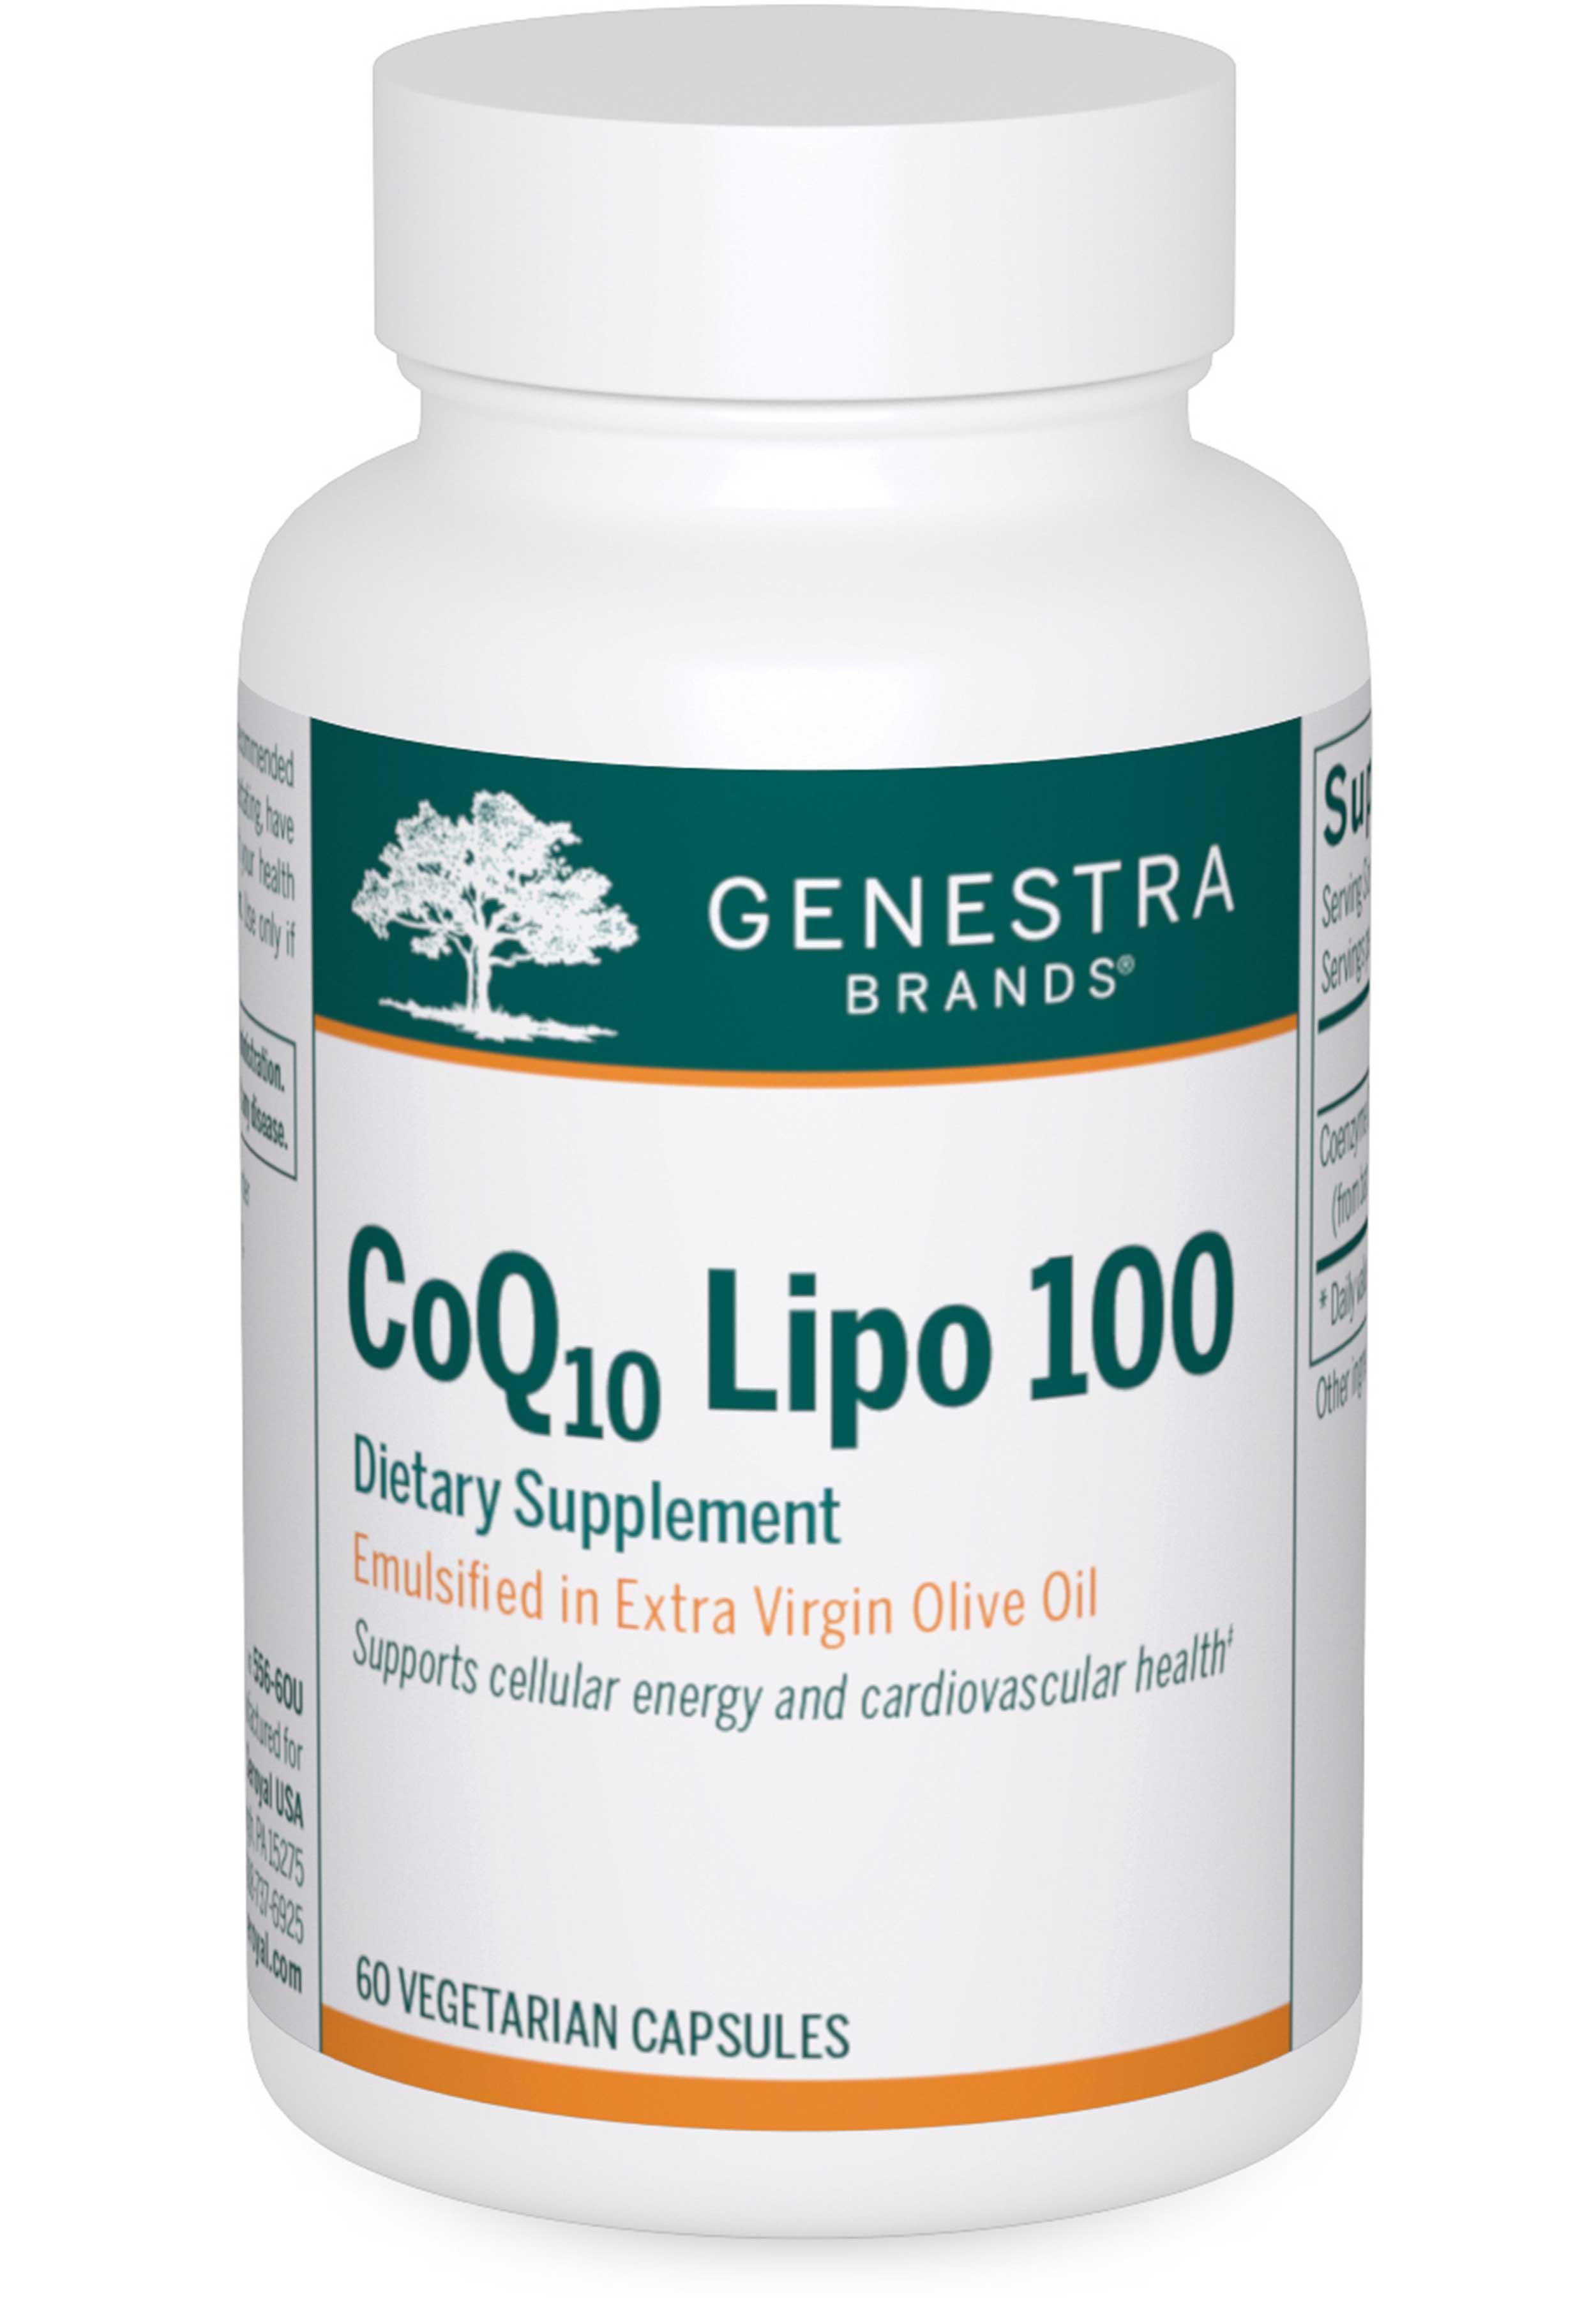 Genestra Brands CoQ10 Lipo 100